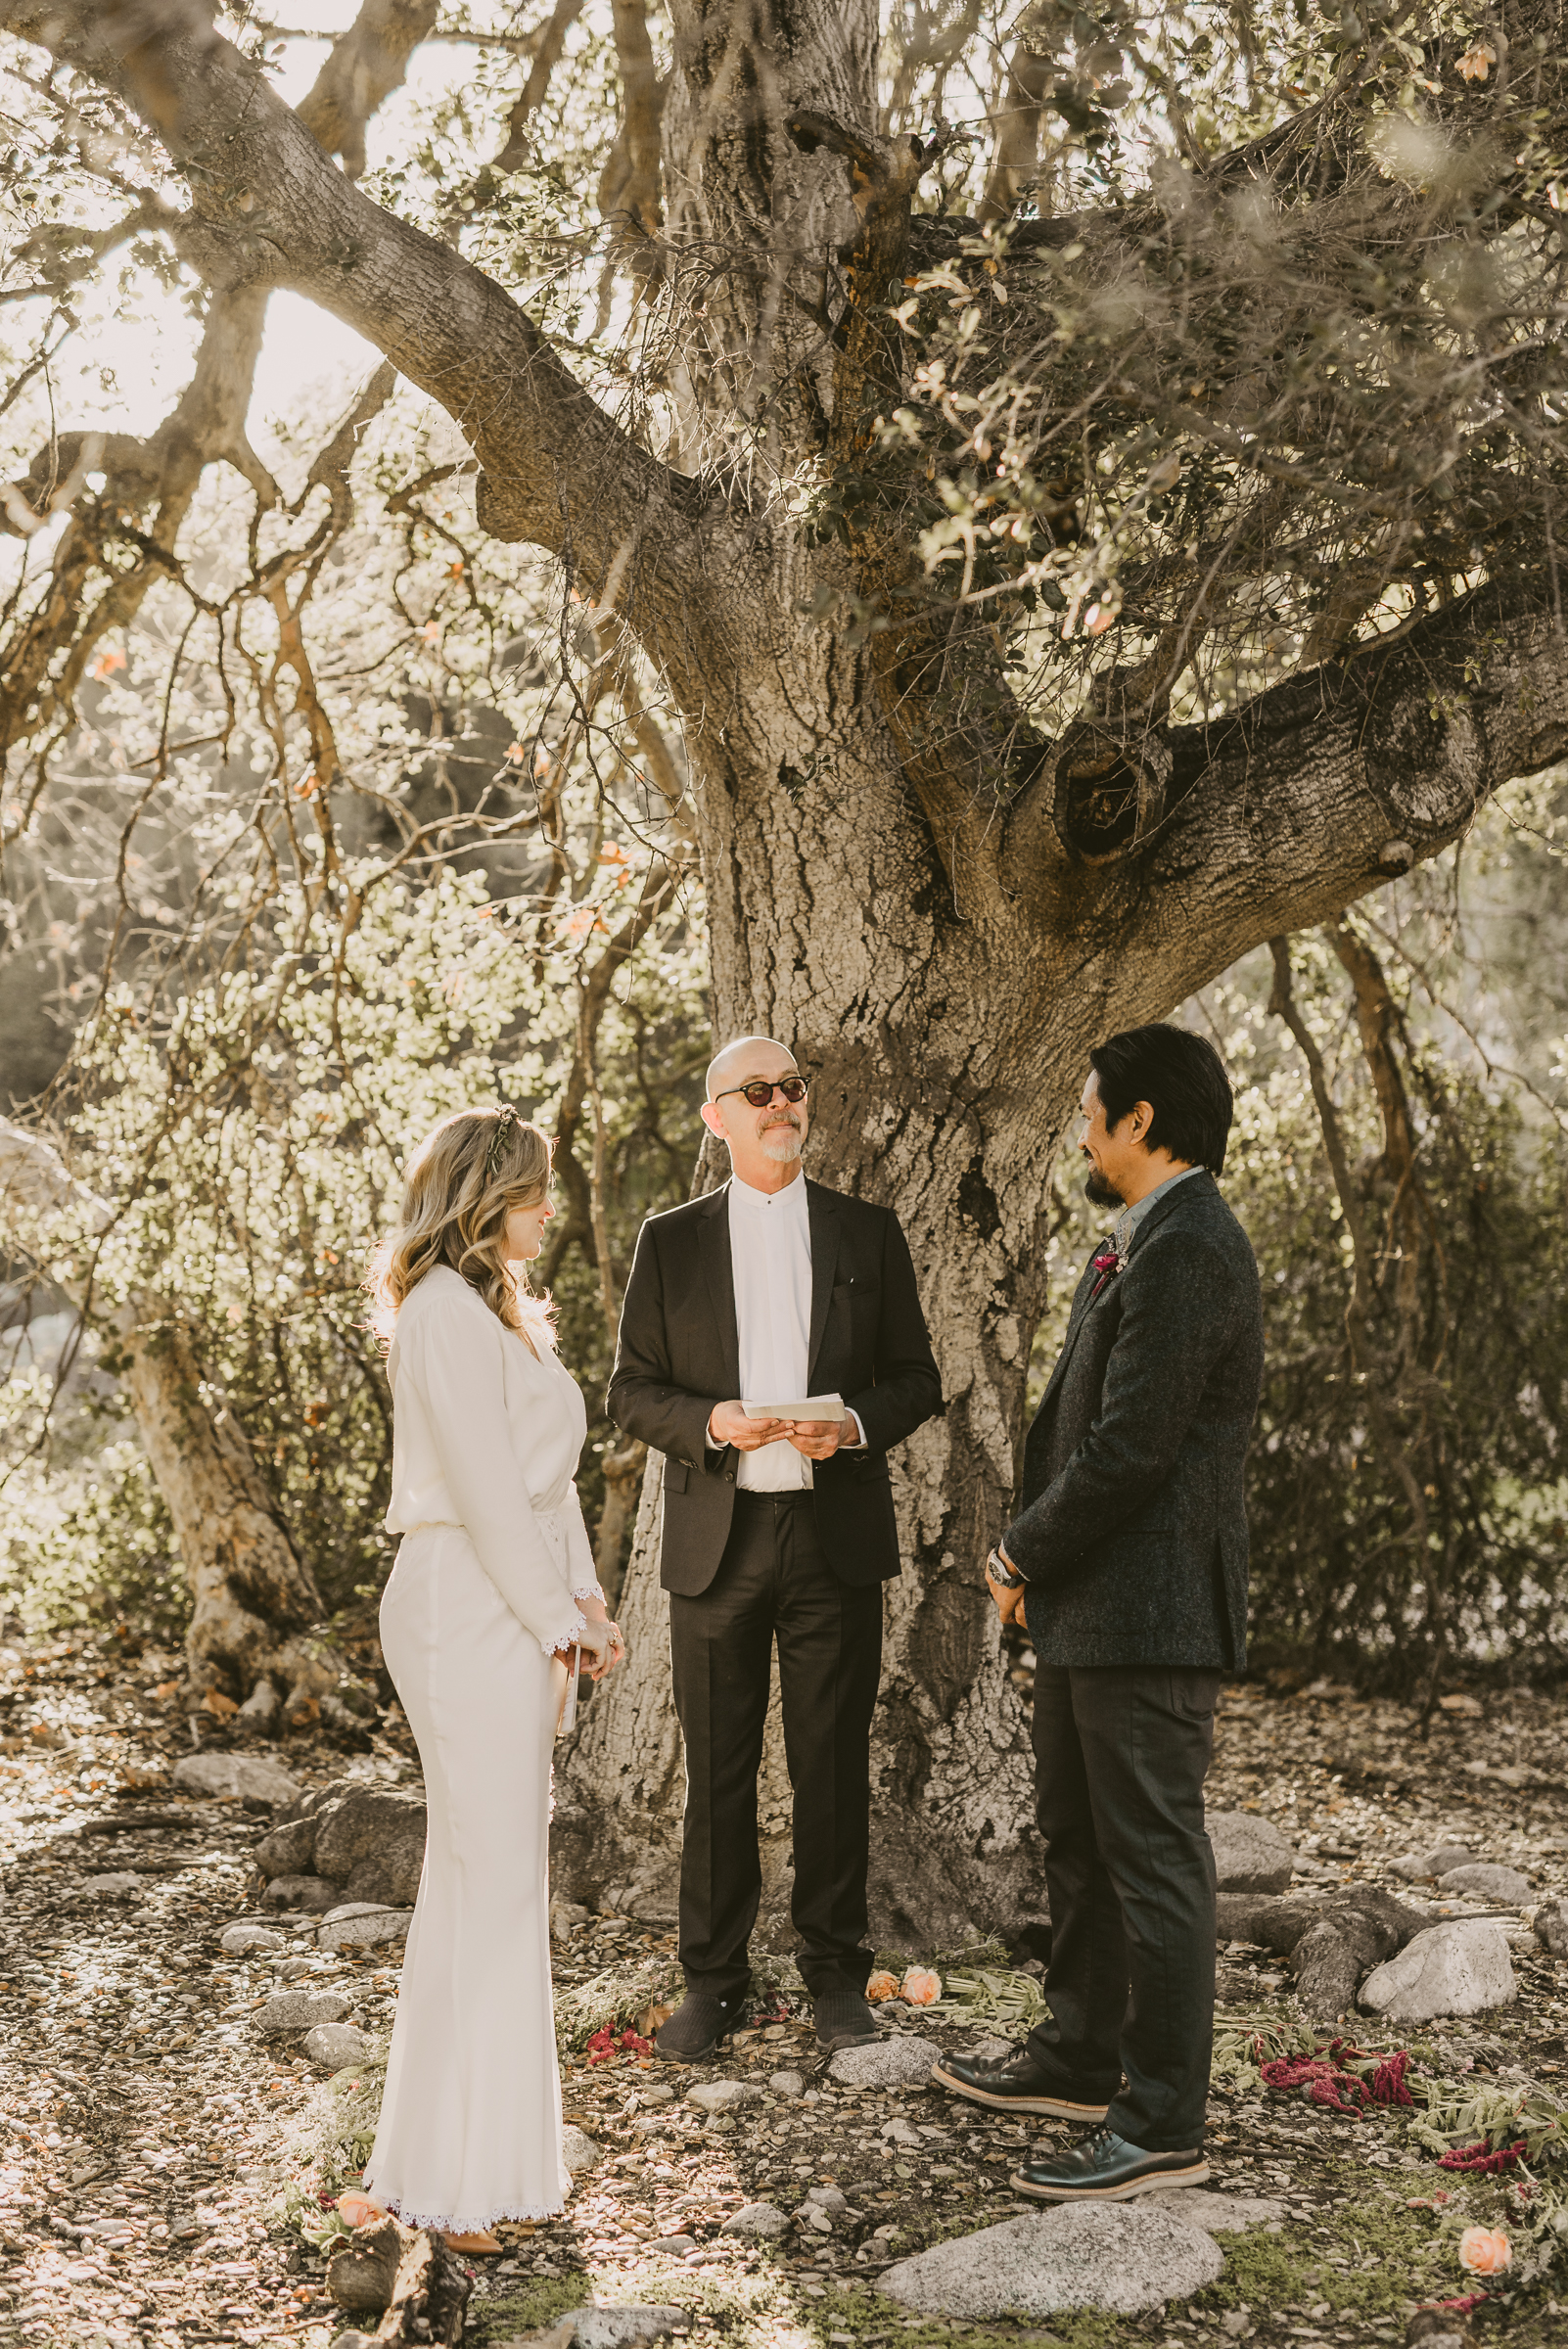 ©Isaiah + Taylor Photography - Intimate Elopement, Eaton Canyon, Los Angeles Wedding Photographer-36.jpg